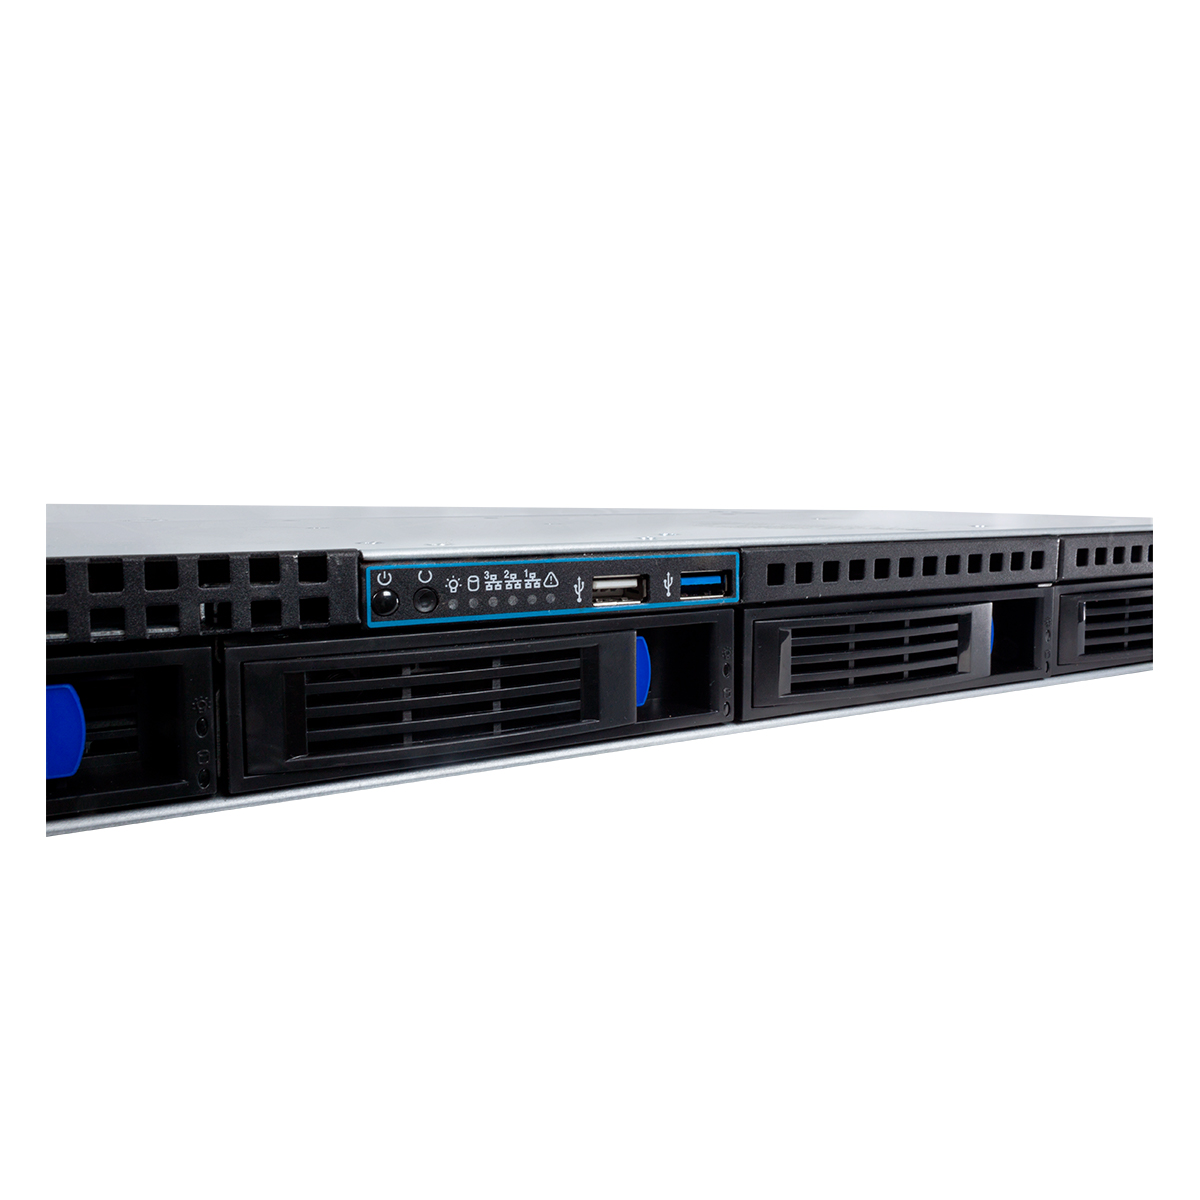 Unykach HSW4104 1U Server 1U Rack - Tailles de lecteur prises en charge 2,5", 3,5" - Cartes mères compatibles EEB, CEB, ATX, MicroATX - USB-A 2.0/3.2